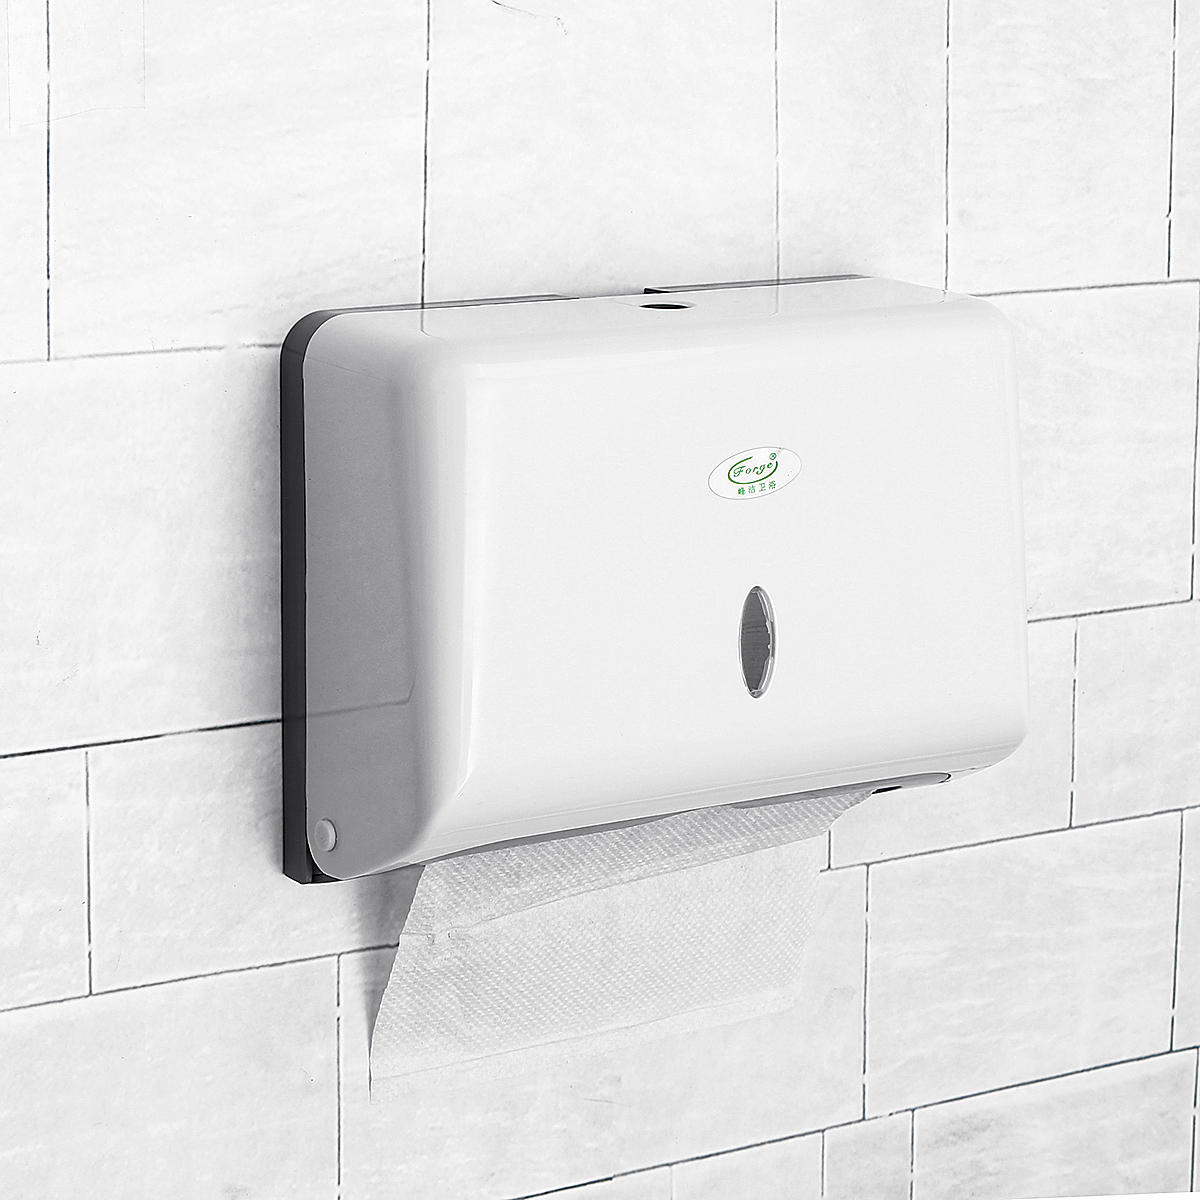 Papel higiénico montado en la pared Toalla Dispensador de tejidos Caja Soporte Cuarto de baño Kit